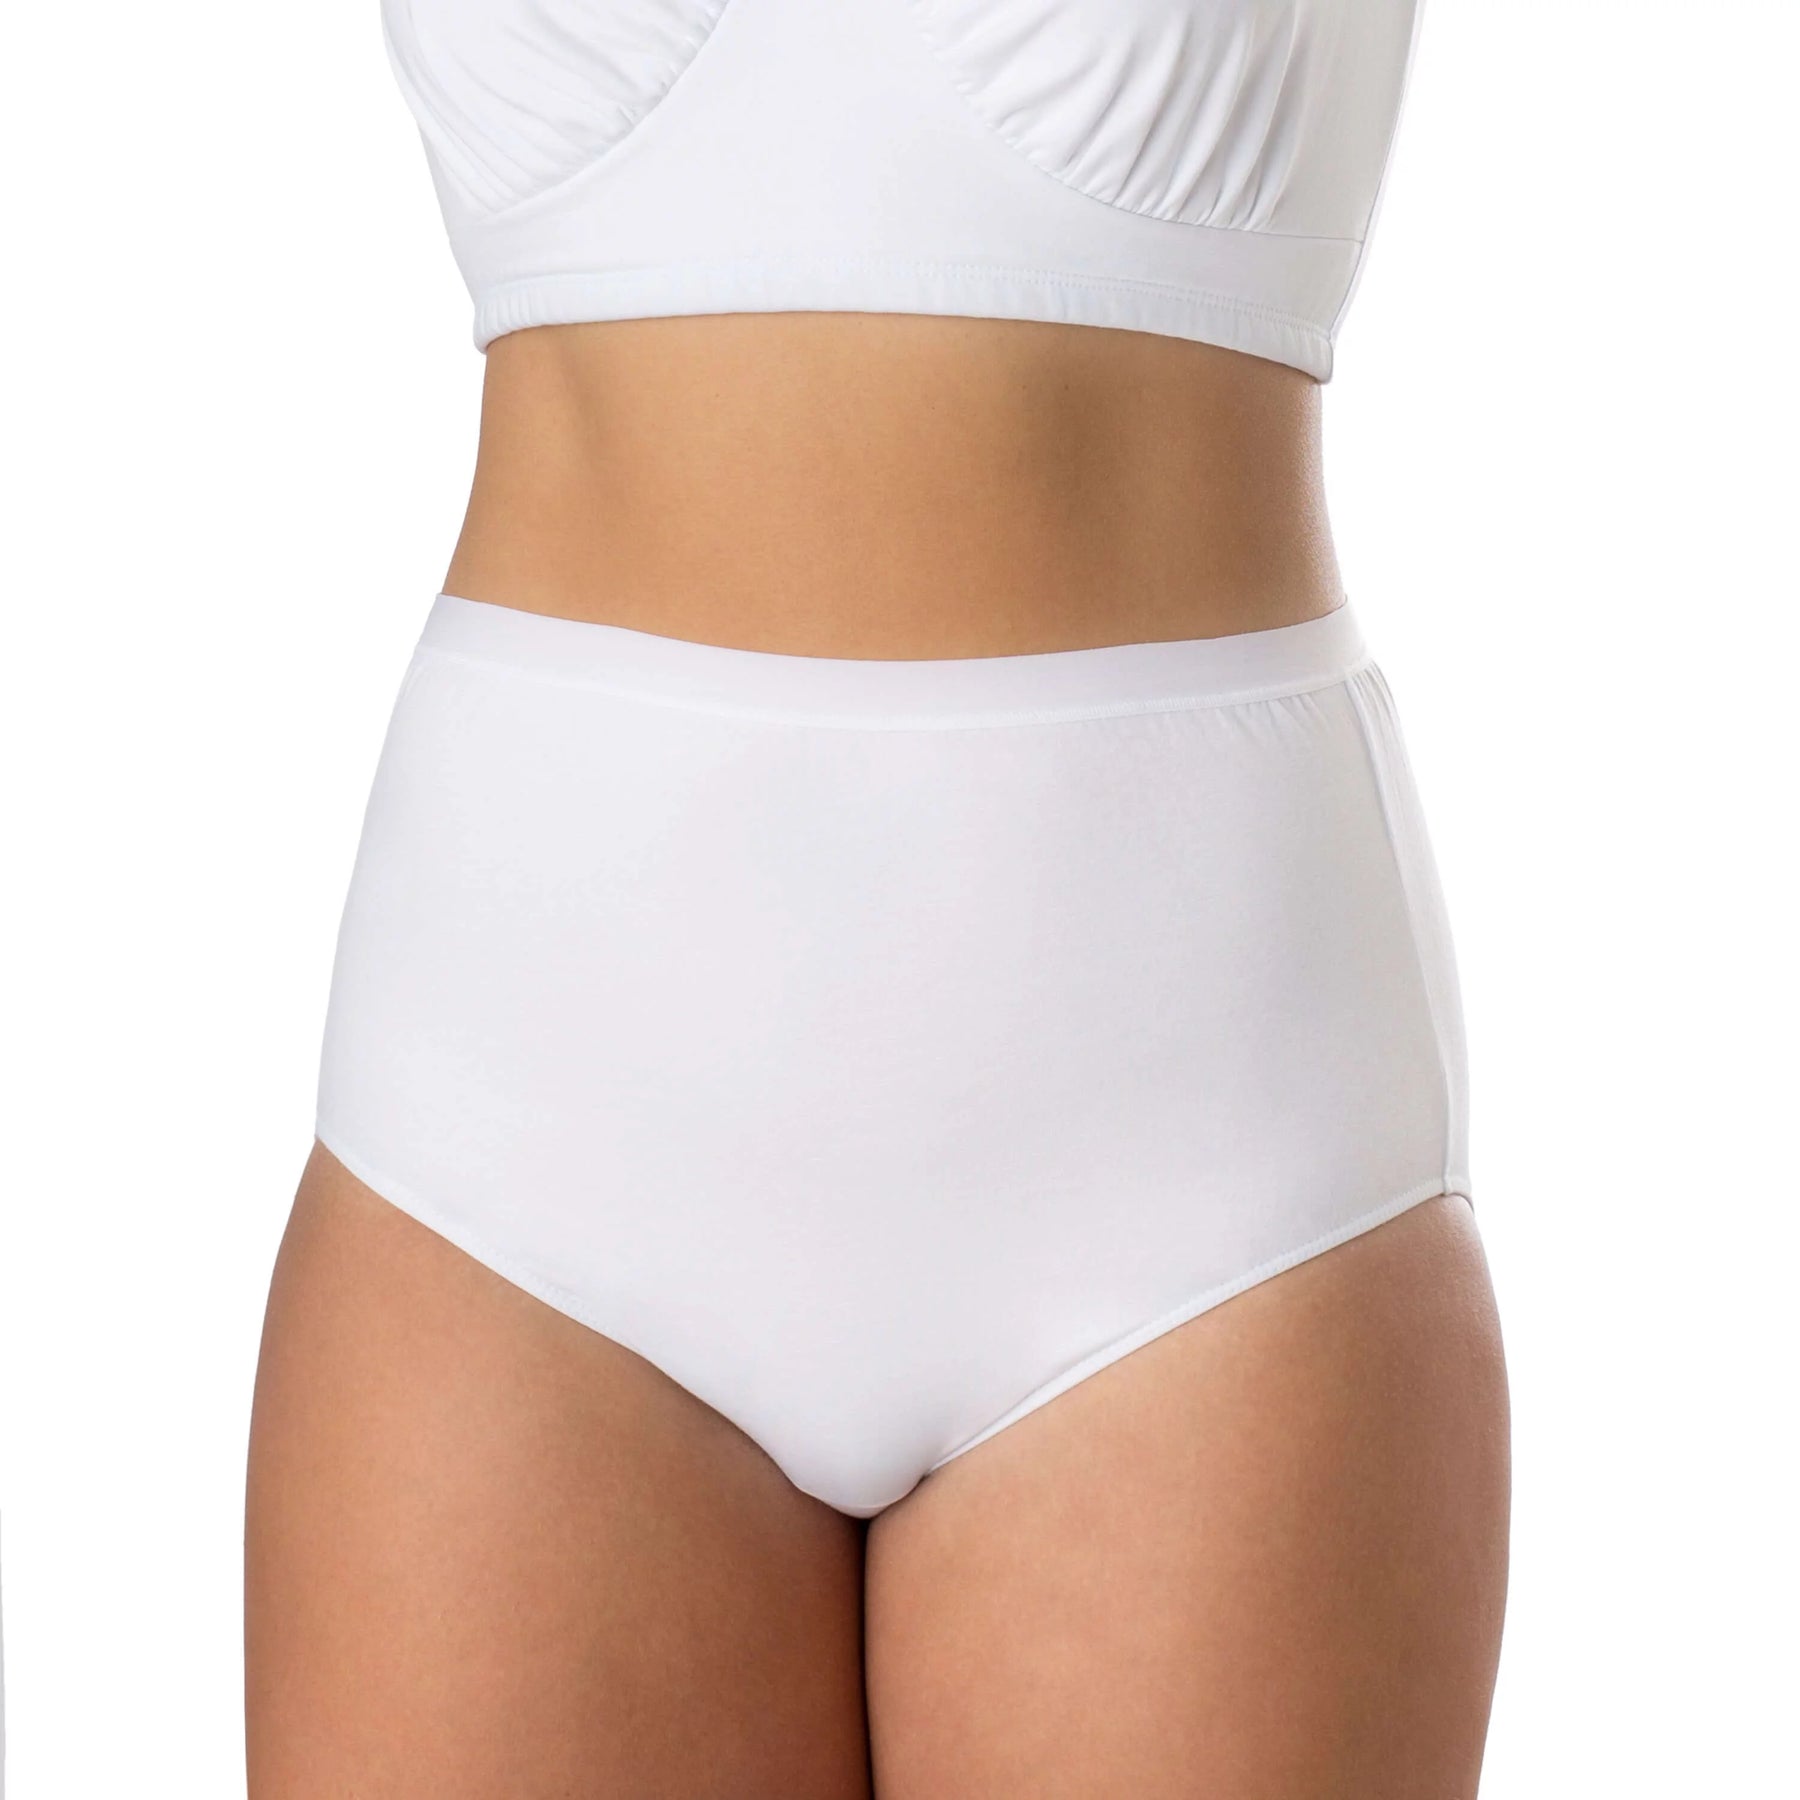 7 Body Bleu Women's Stretch fit underwear panties 95% cotton plus size  L-XXXL